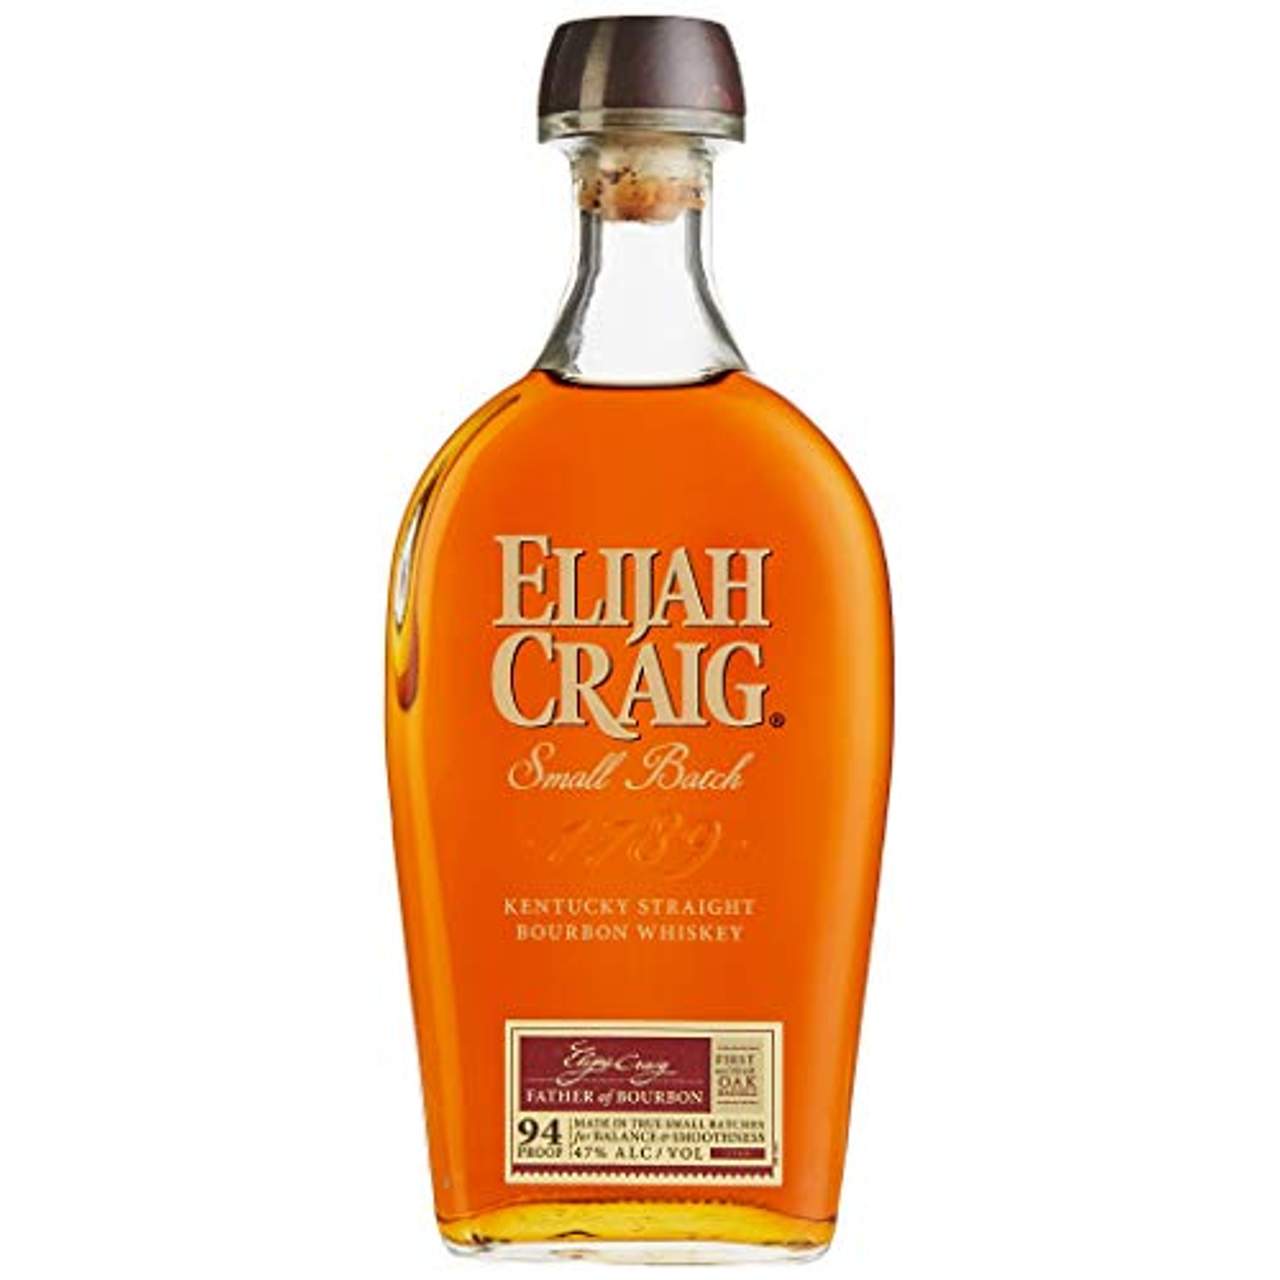 Elijah Craig Small Batch Kentucky Straight Bourbon Whisky